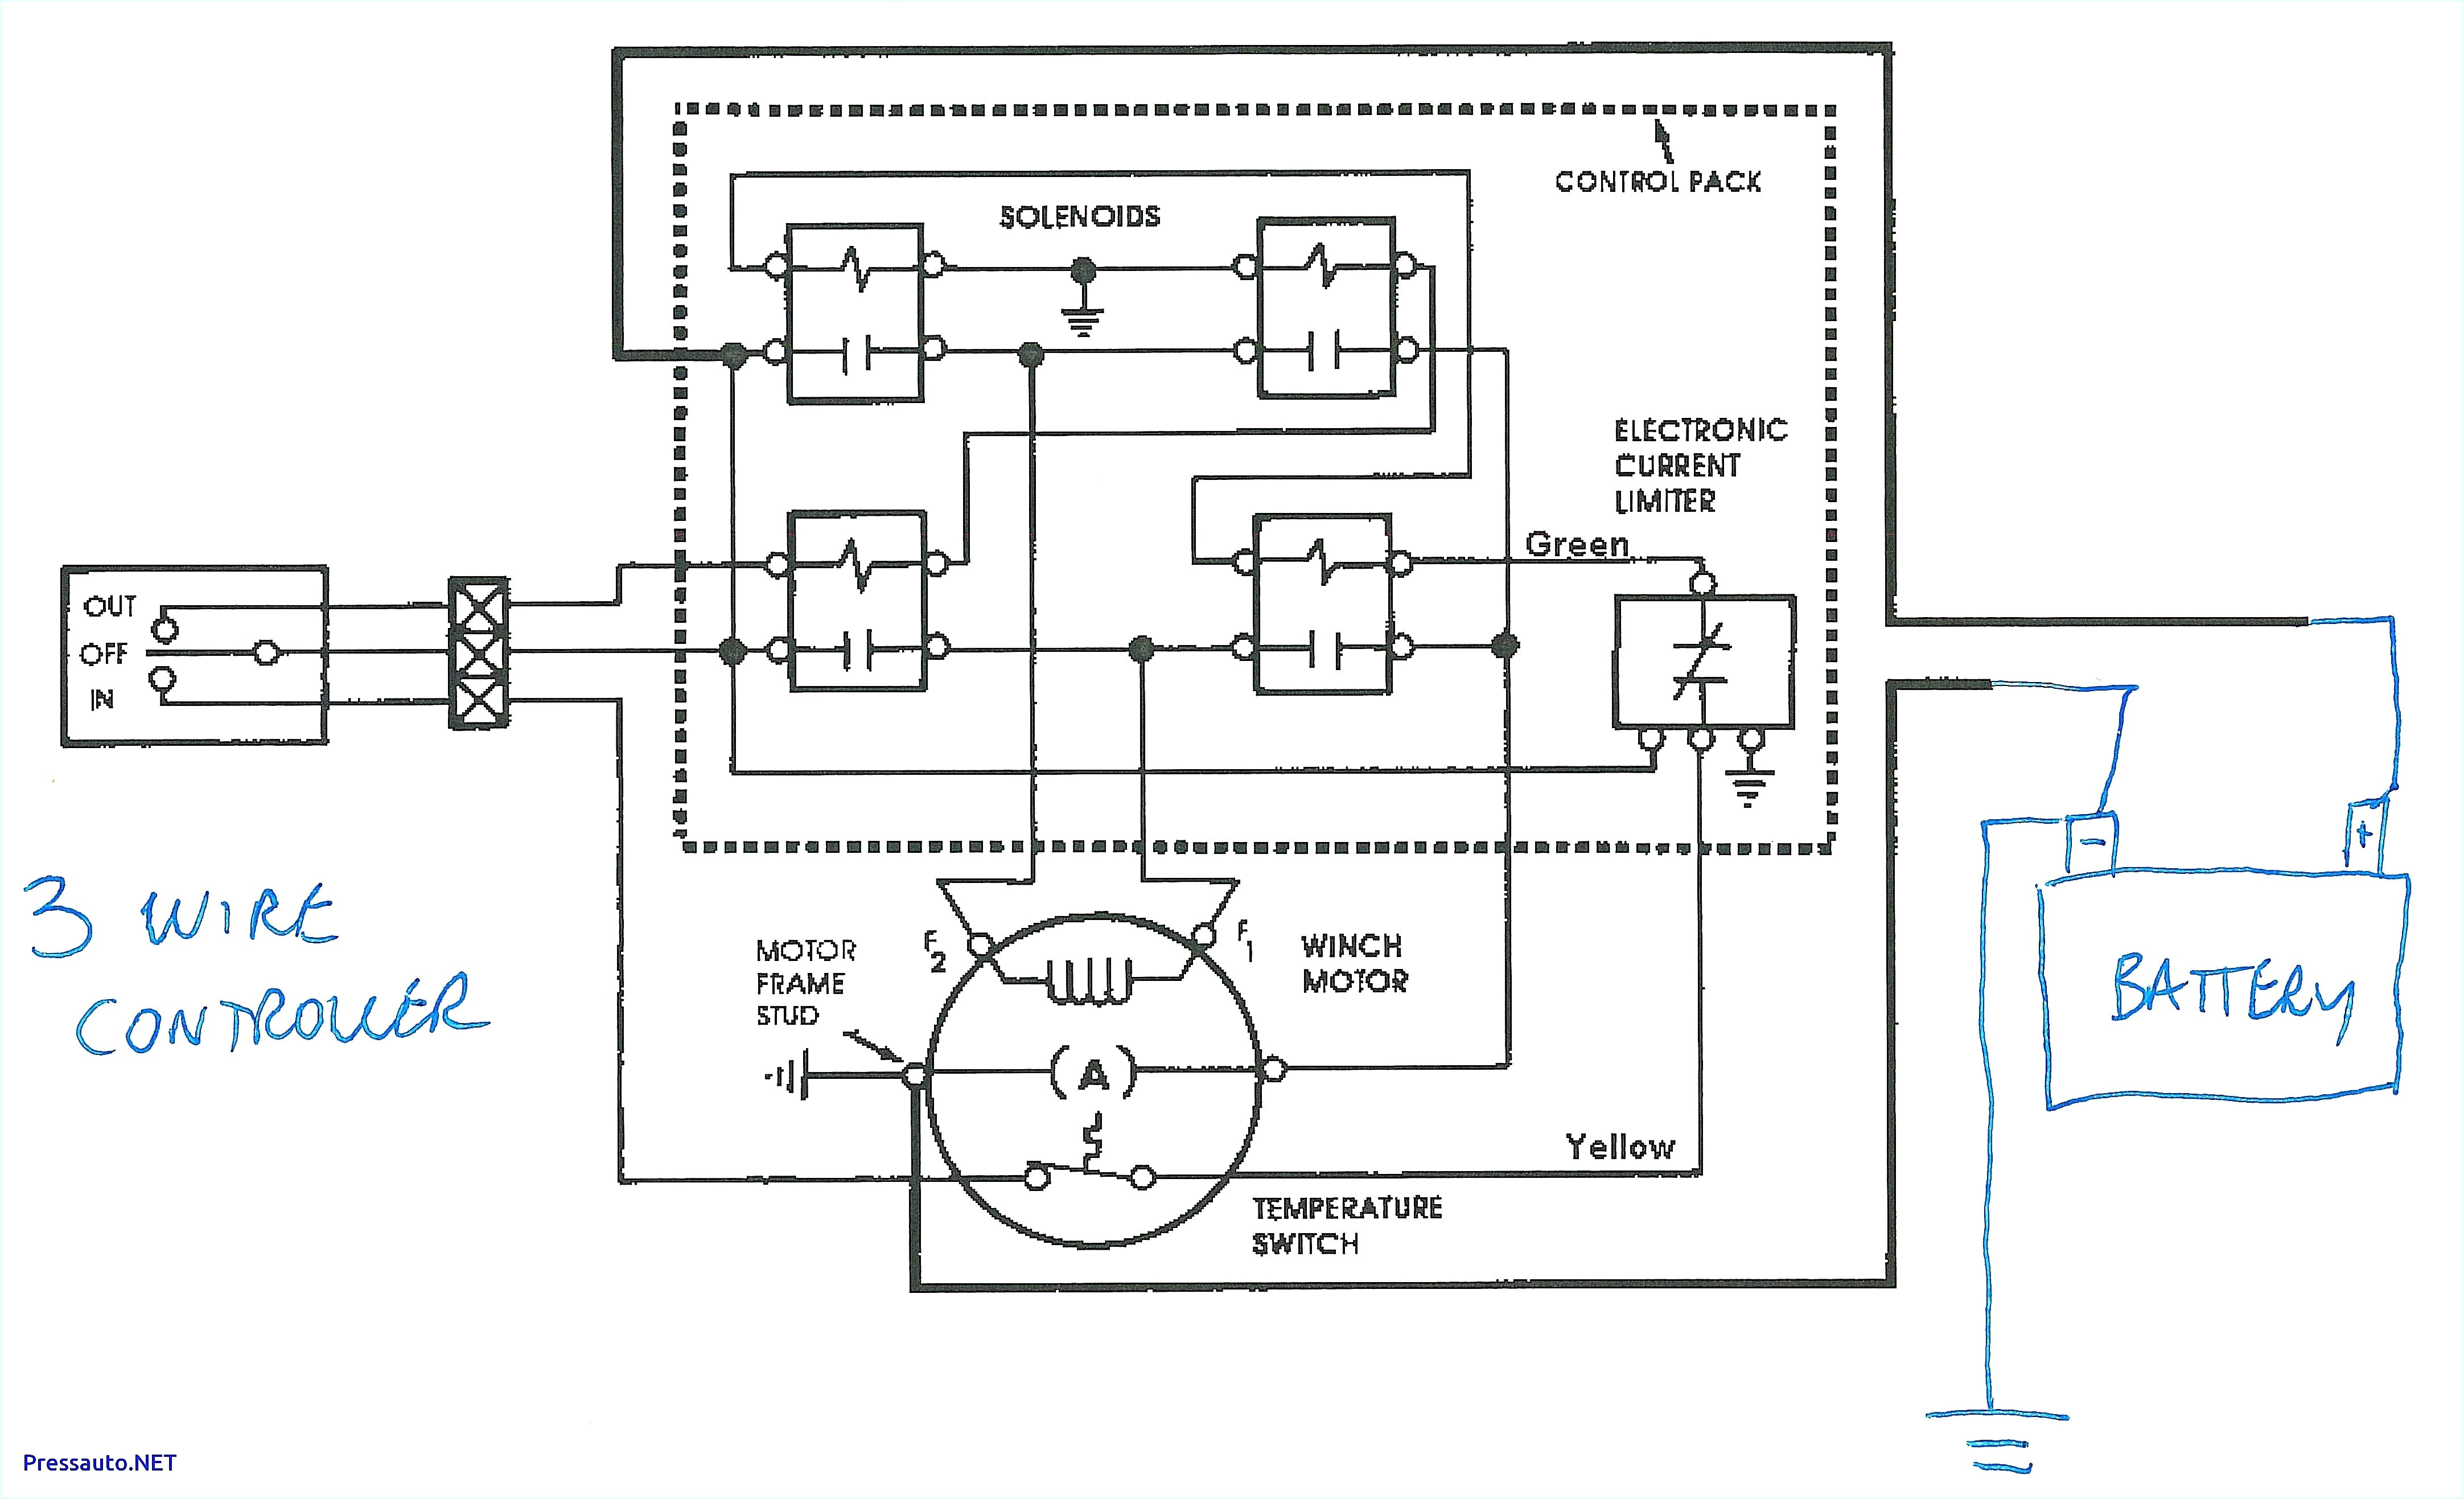 wiring diagram for a polaris winch wiring diagram databasepolaris trail boss 250 wiring diagram